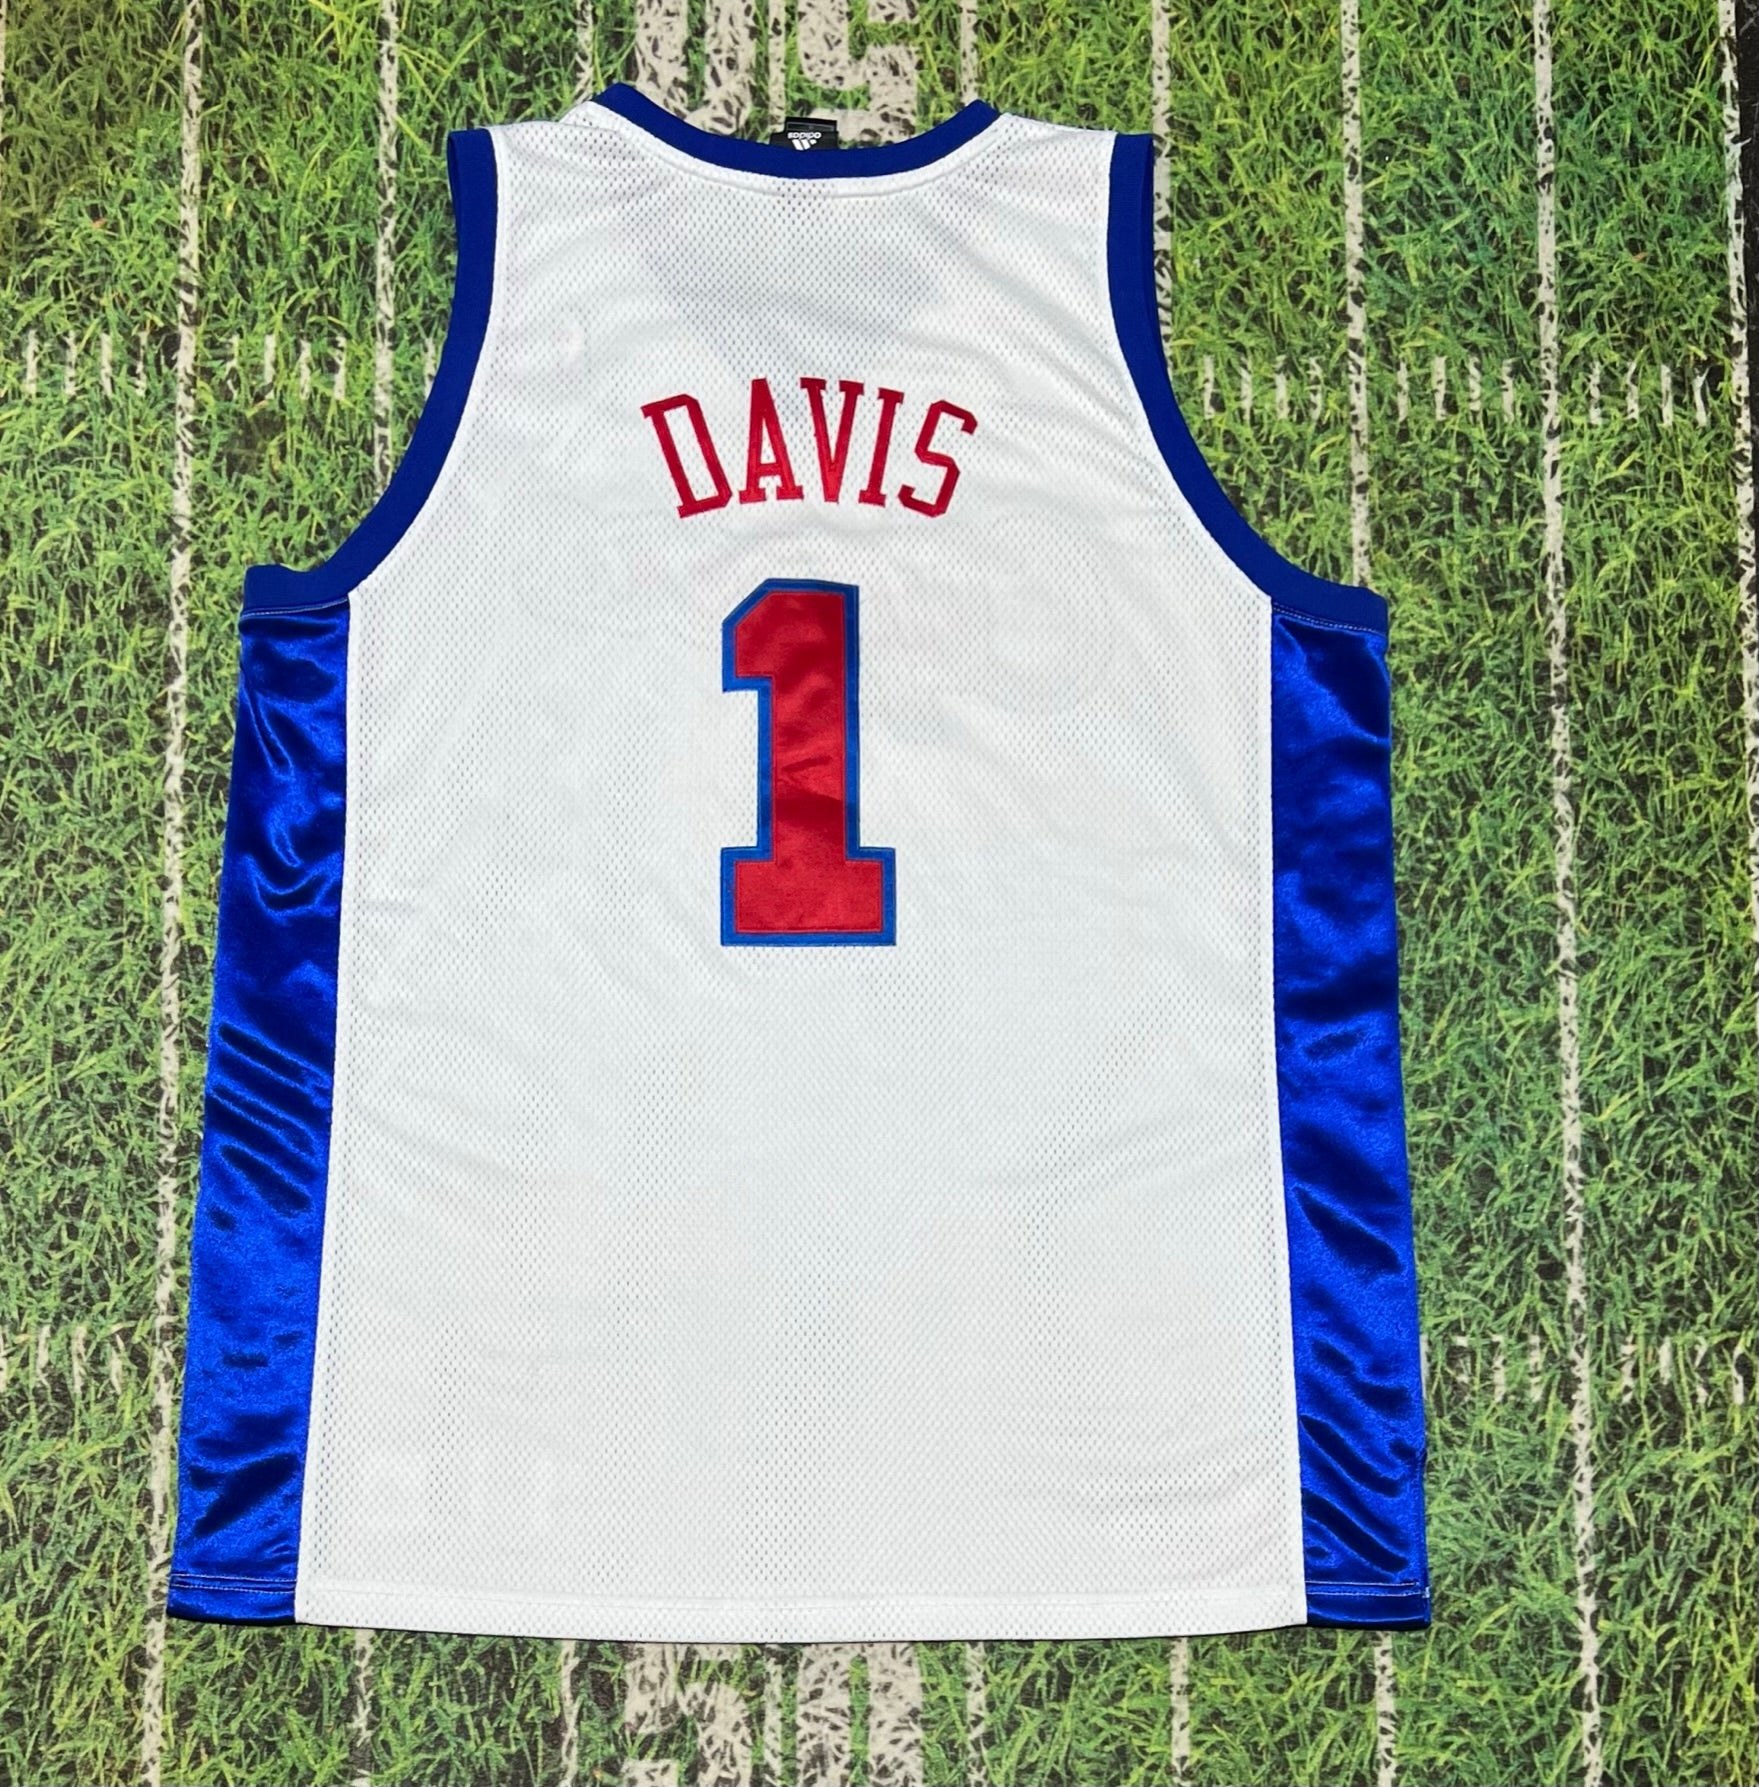 48 ADIDAS NBA L.A. CLIPPERS BARON DAVIS Basketball JERSEY White